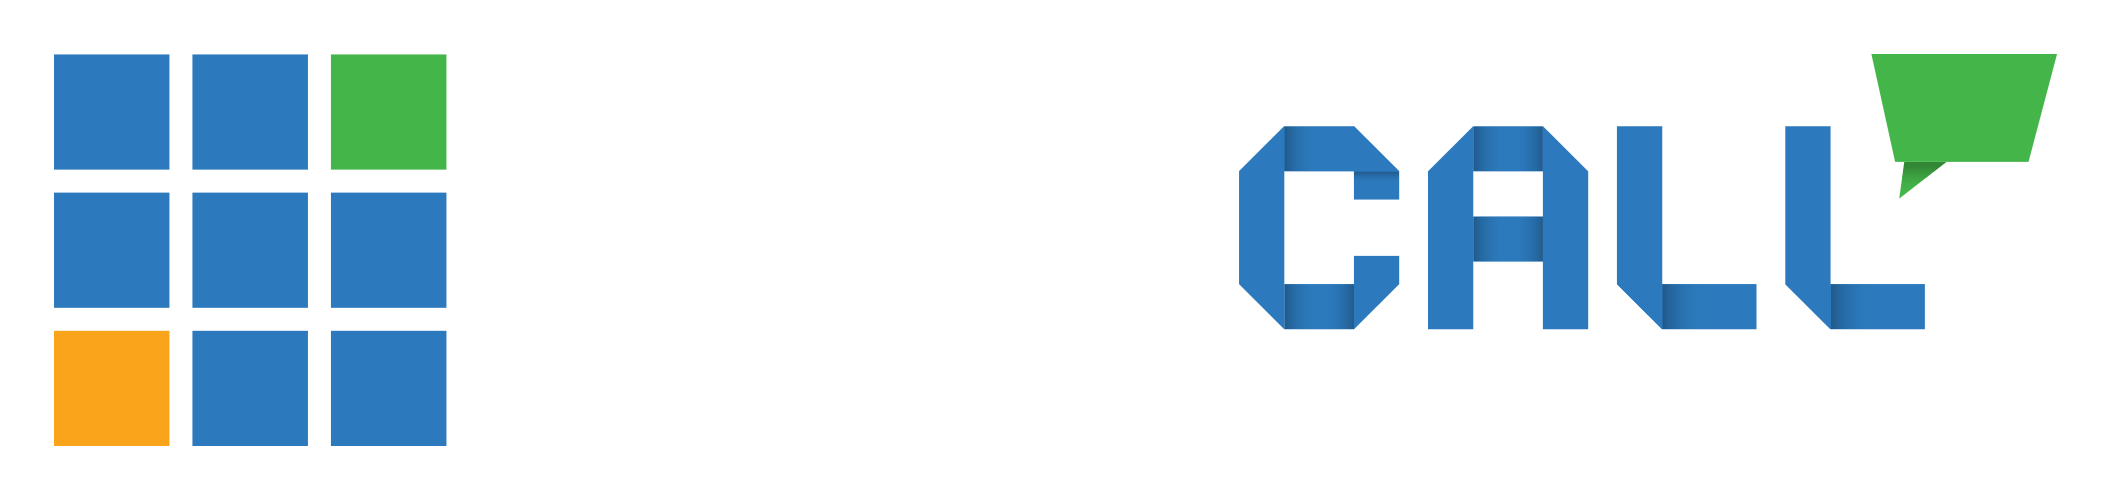 Give Us A Call Logo - vMix Logos